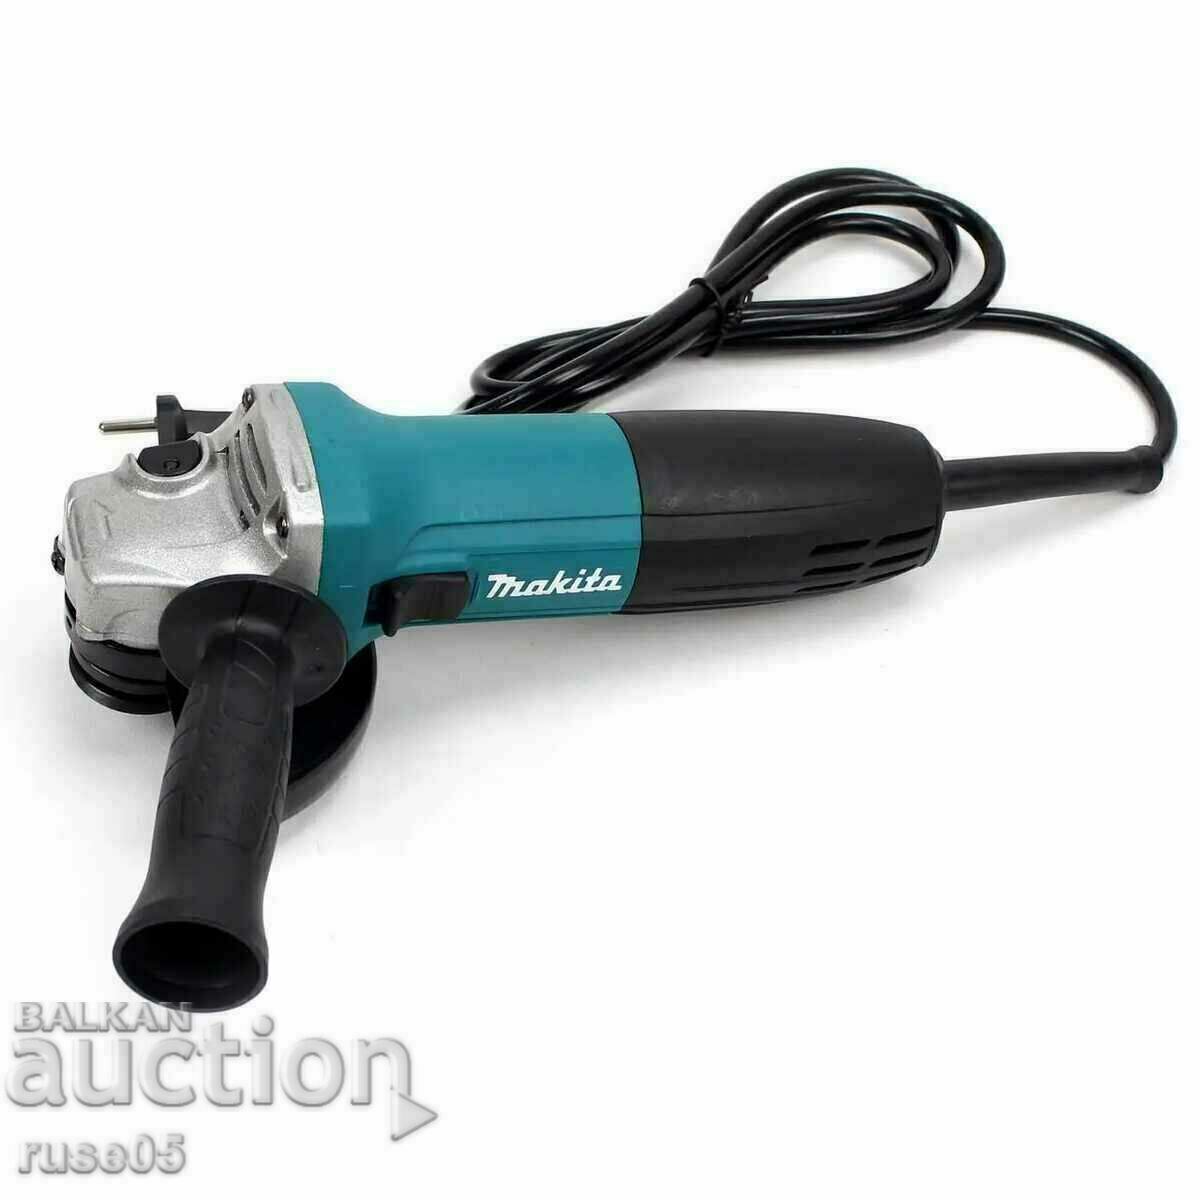 Angle grinder "Makita - GA 5030" new working